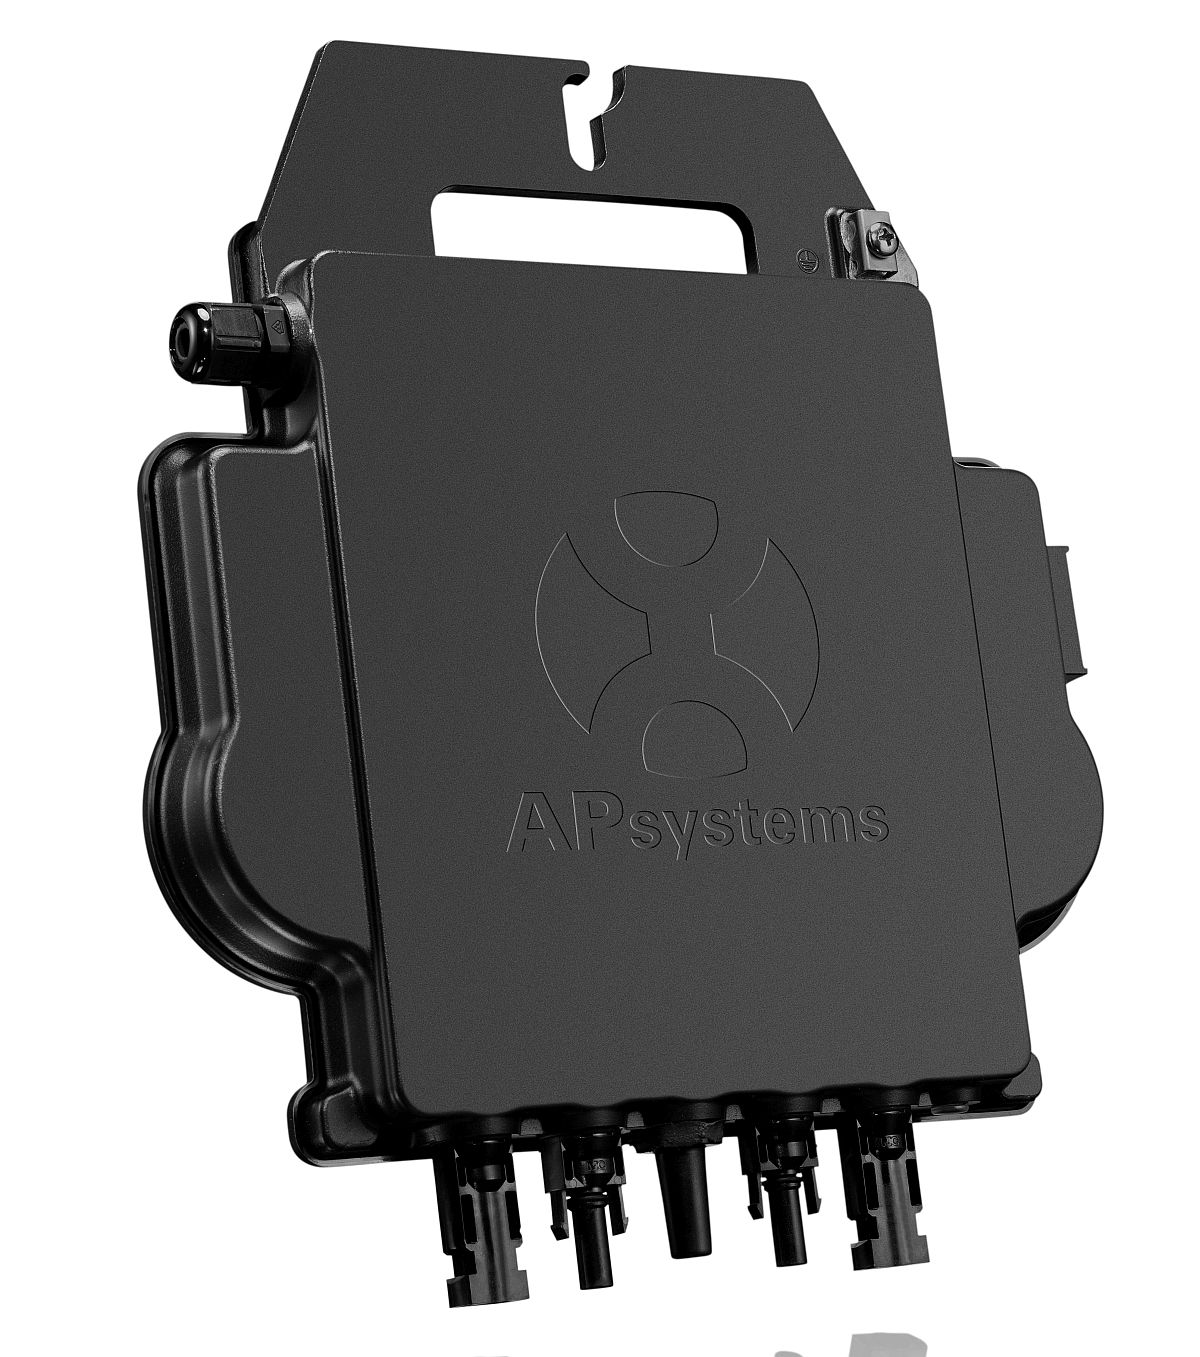 Paket 860Wp: 2x Trina 430 Wp Vertex S + APSystems Mikrowechselrichter + 8x Z-Halter